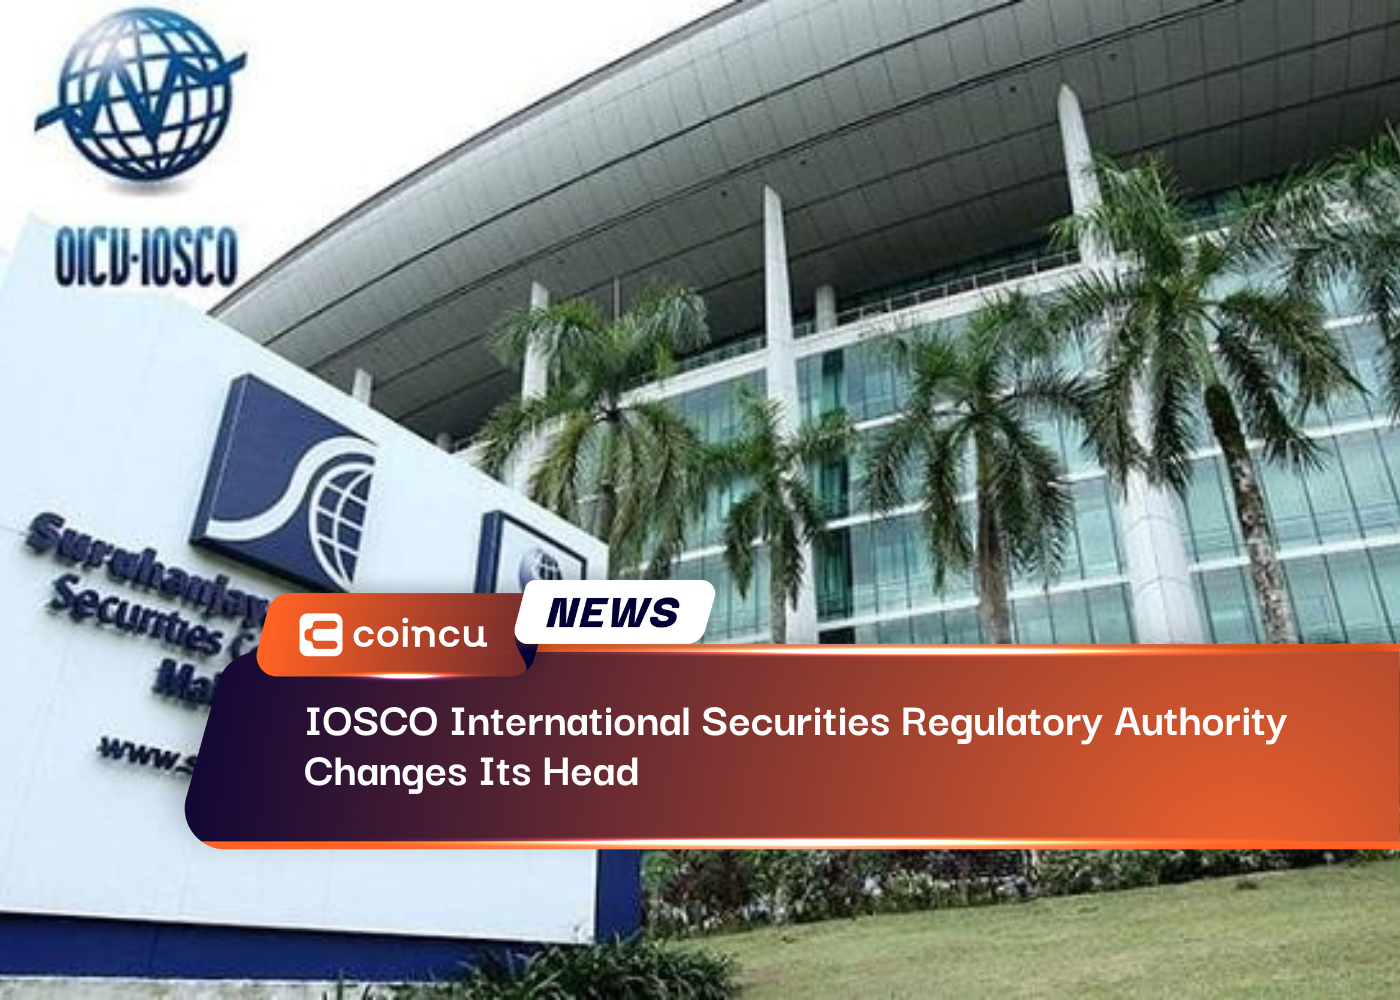 IOSCO International Securities Regulatory Authority Changes Its Head